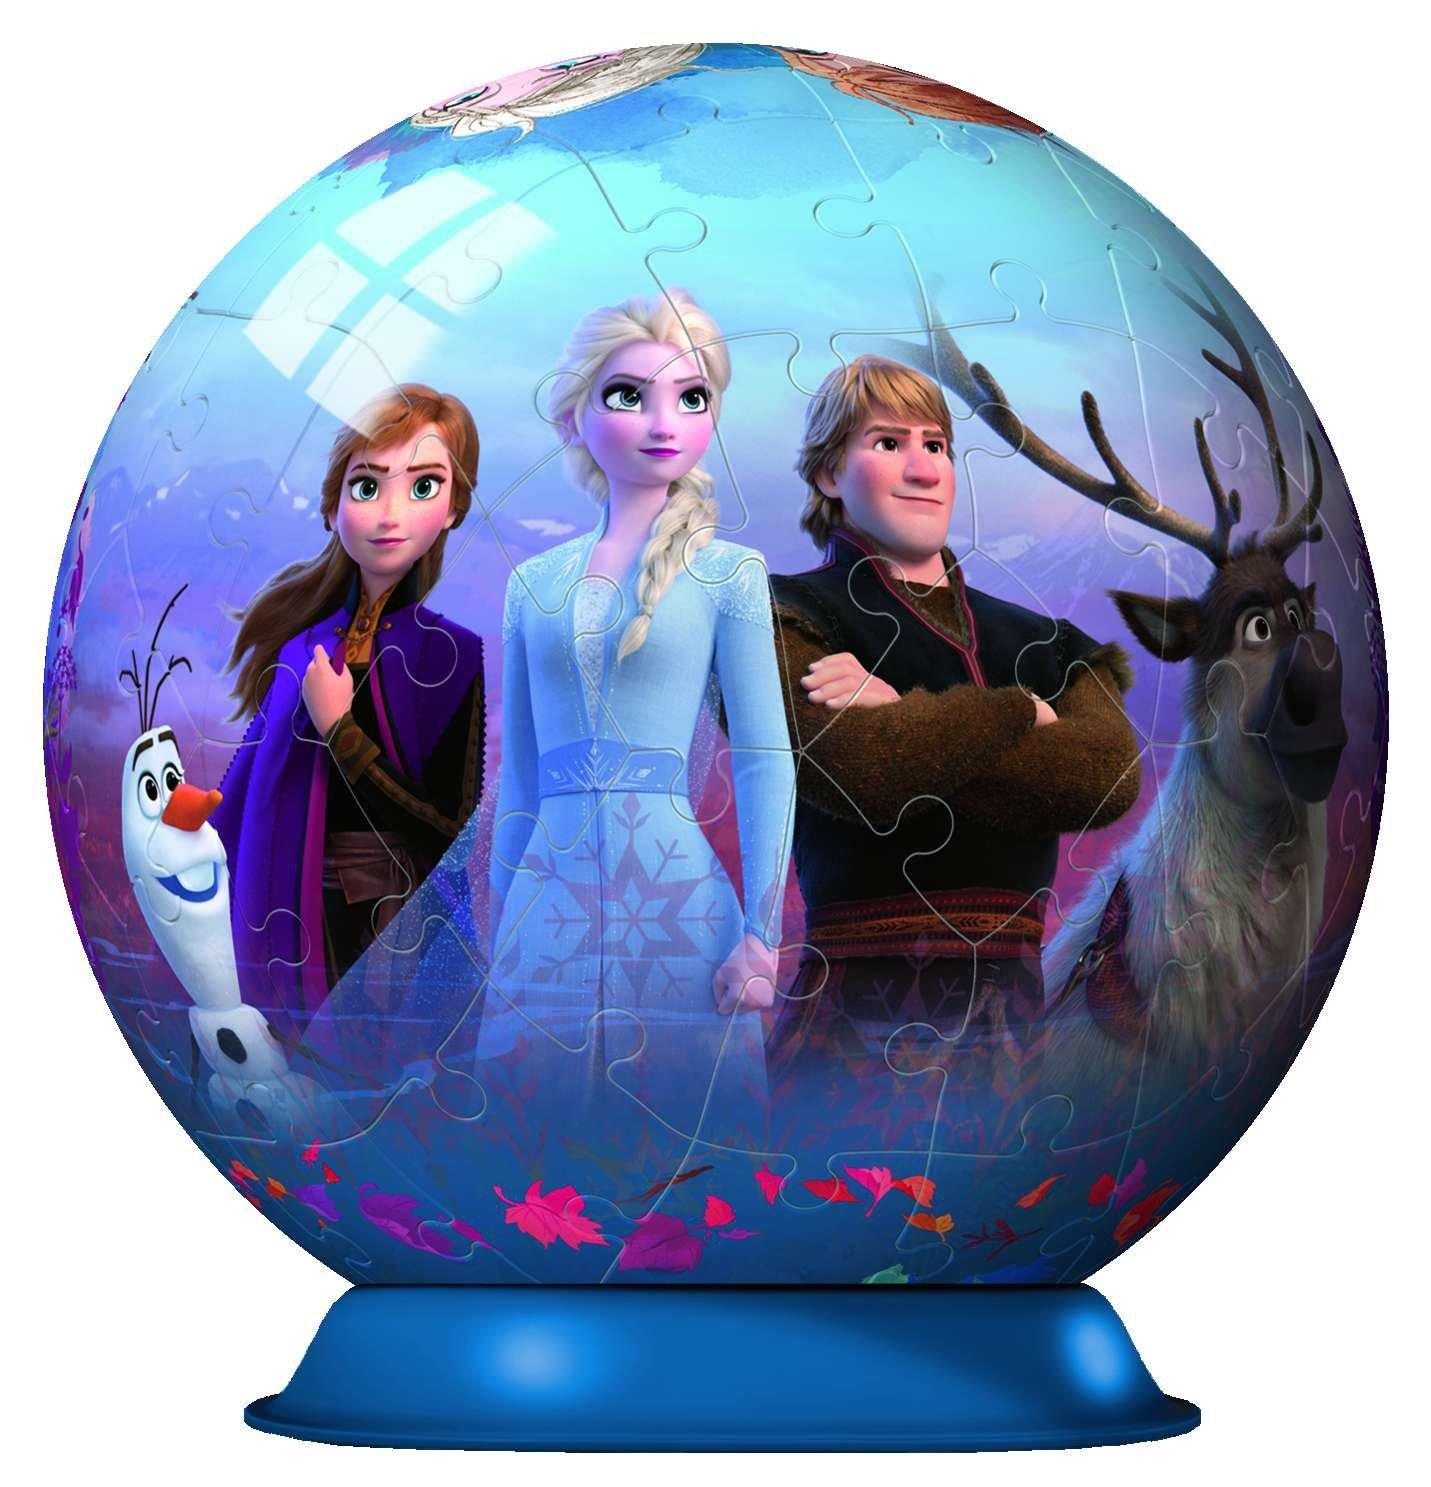 Ravensburger  3D Puzzle Ball, Frozen II 